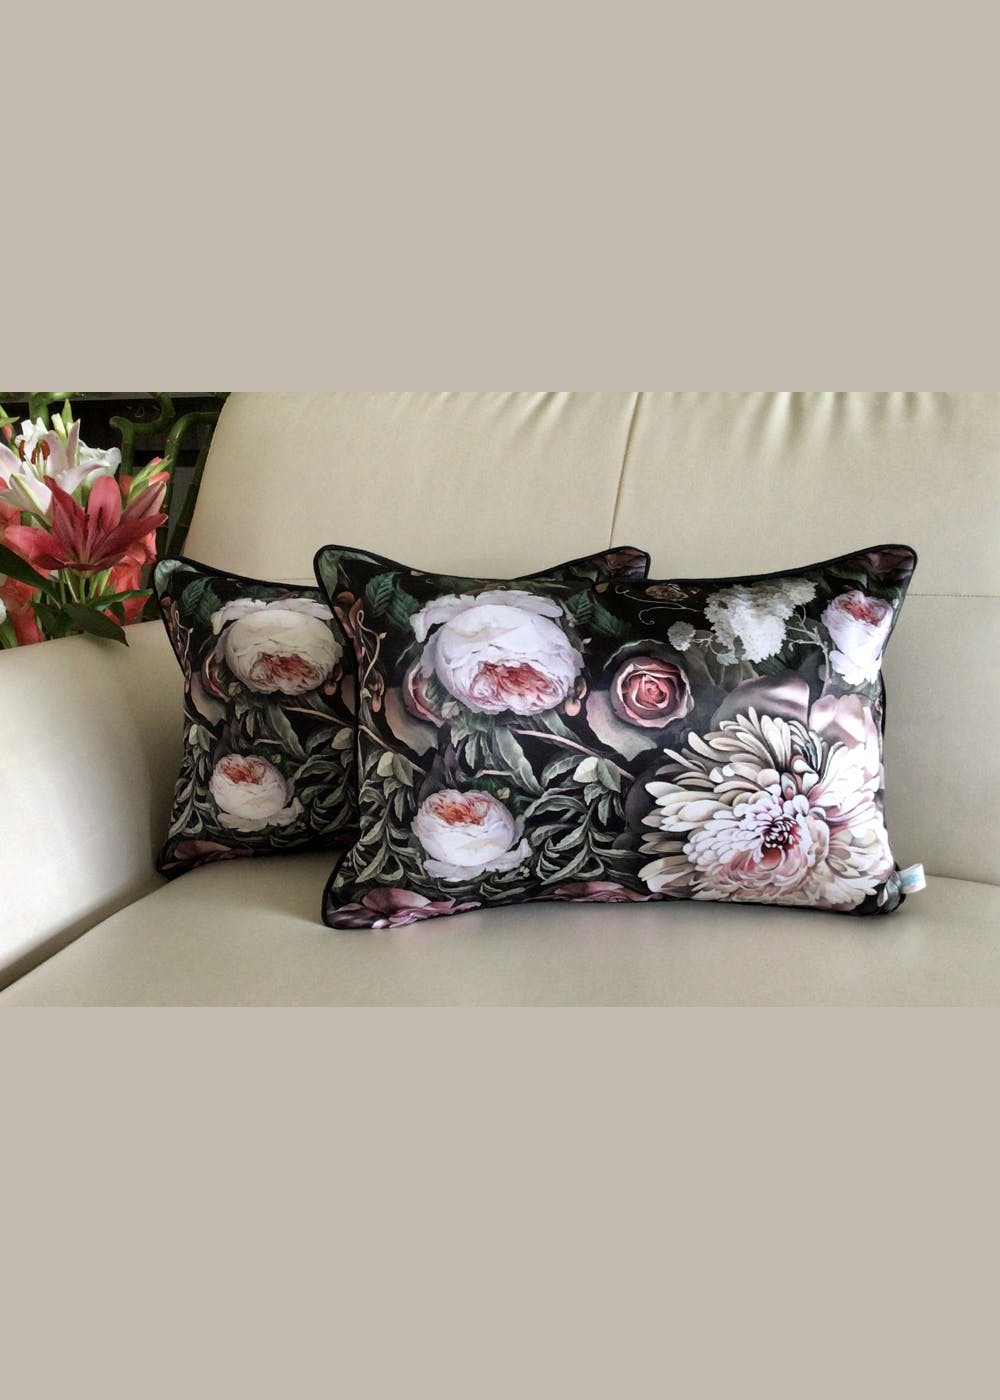 Art Silk Cushion Cover Reversible Throw Pillow Sofa Waist Cover for Home Décor